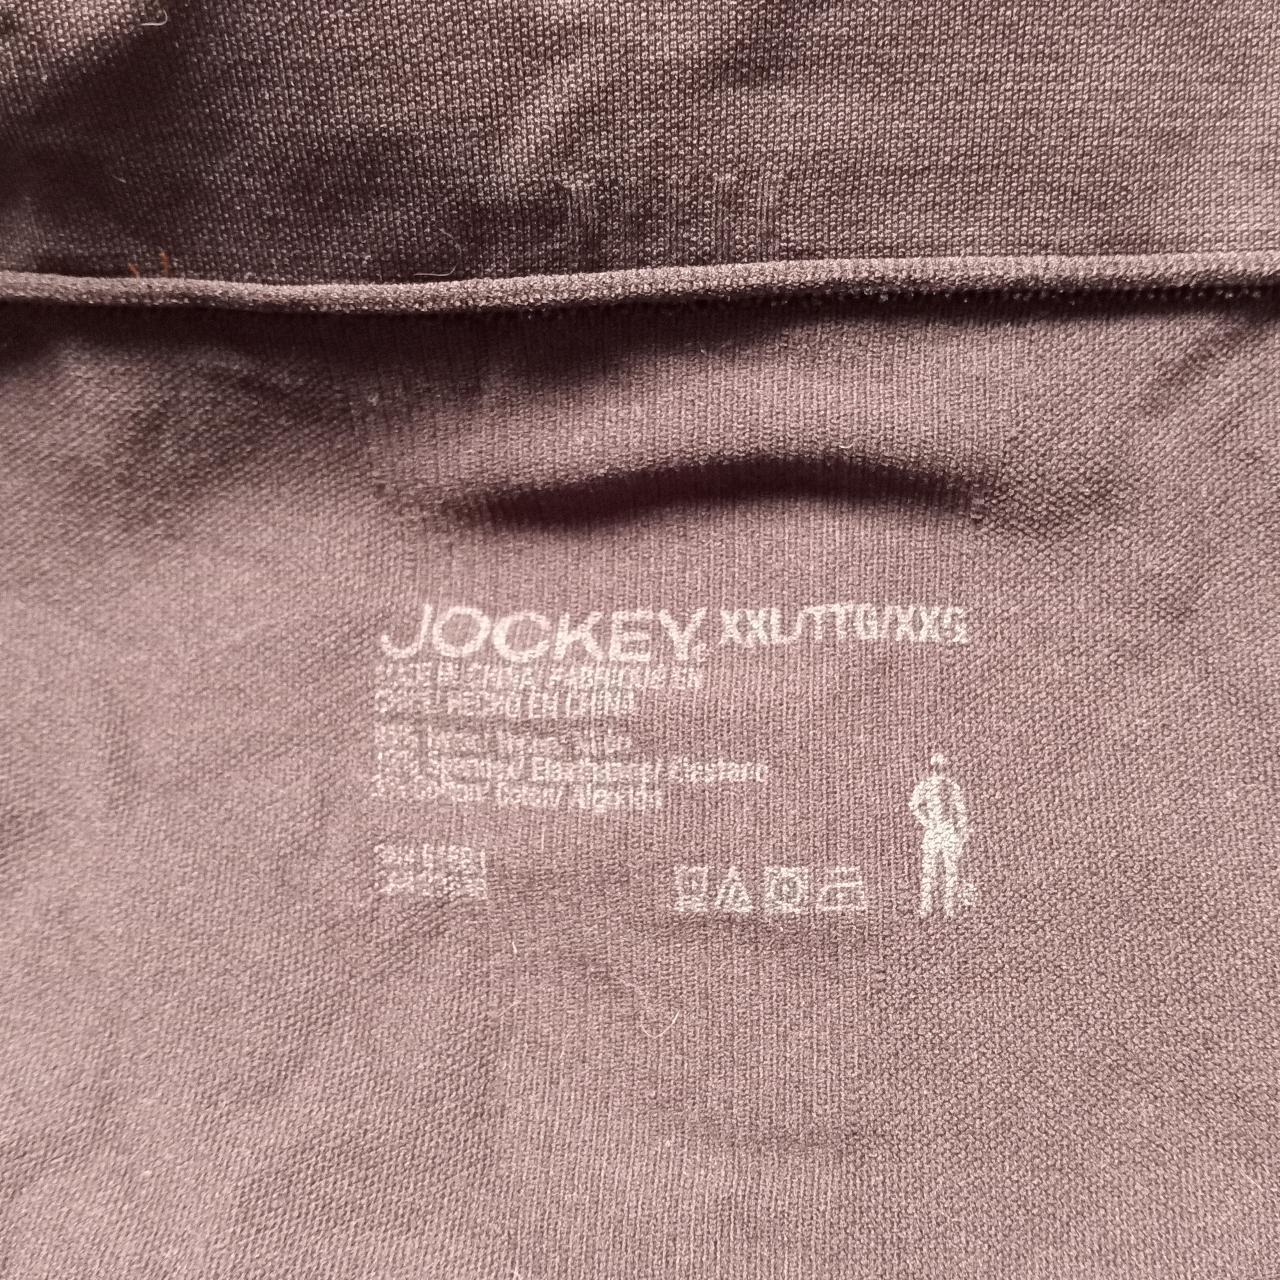 Jockey Men's Black Shorts (2)